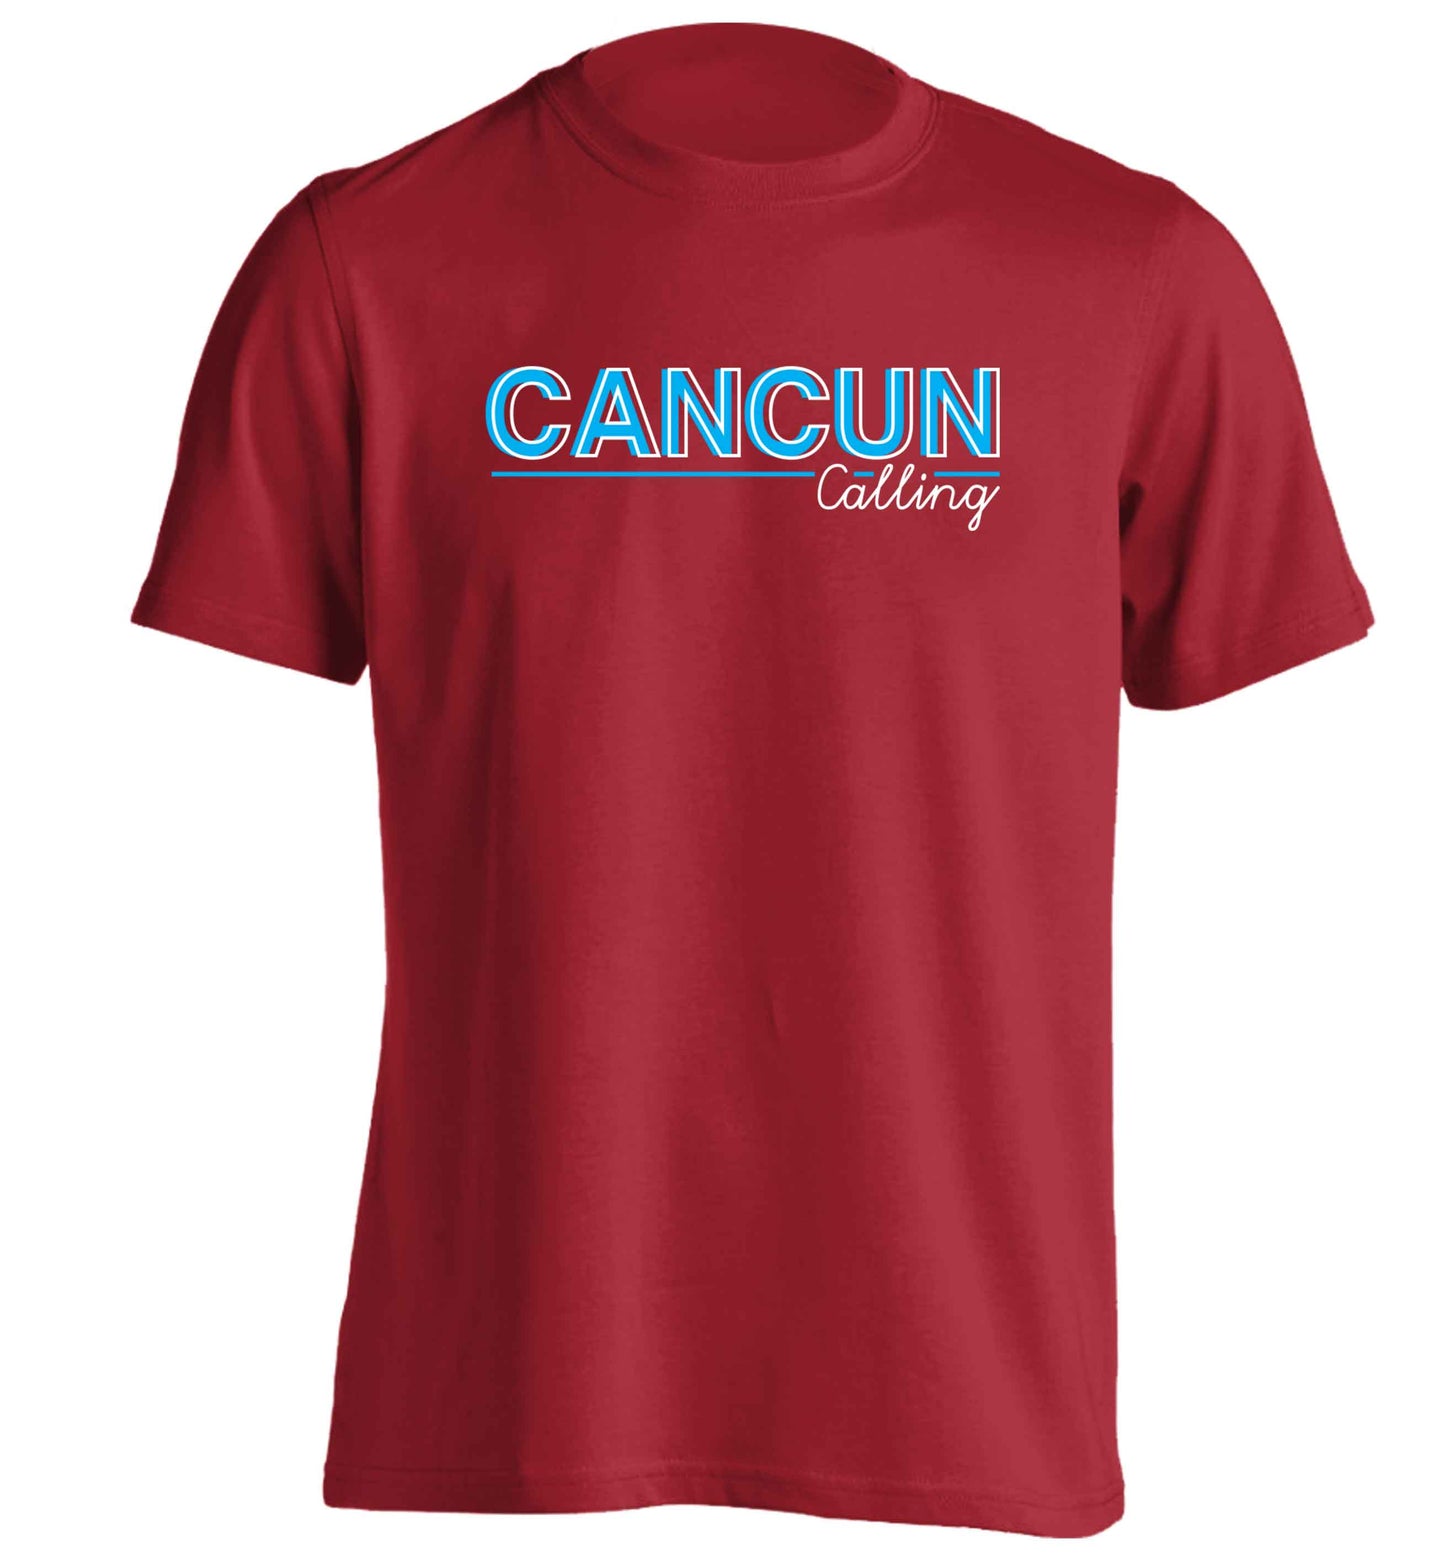 Cancun calling adults unisex red Tshirt 2XL